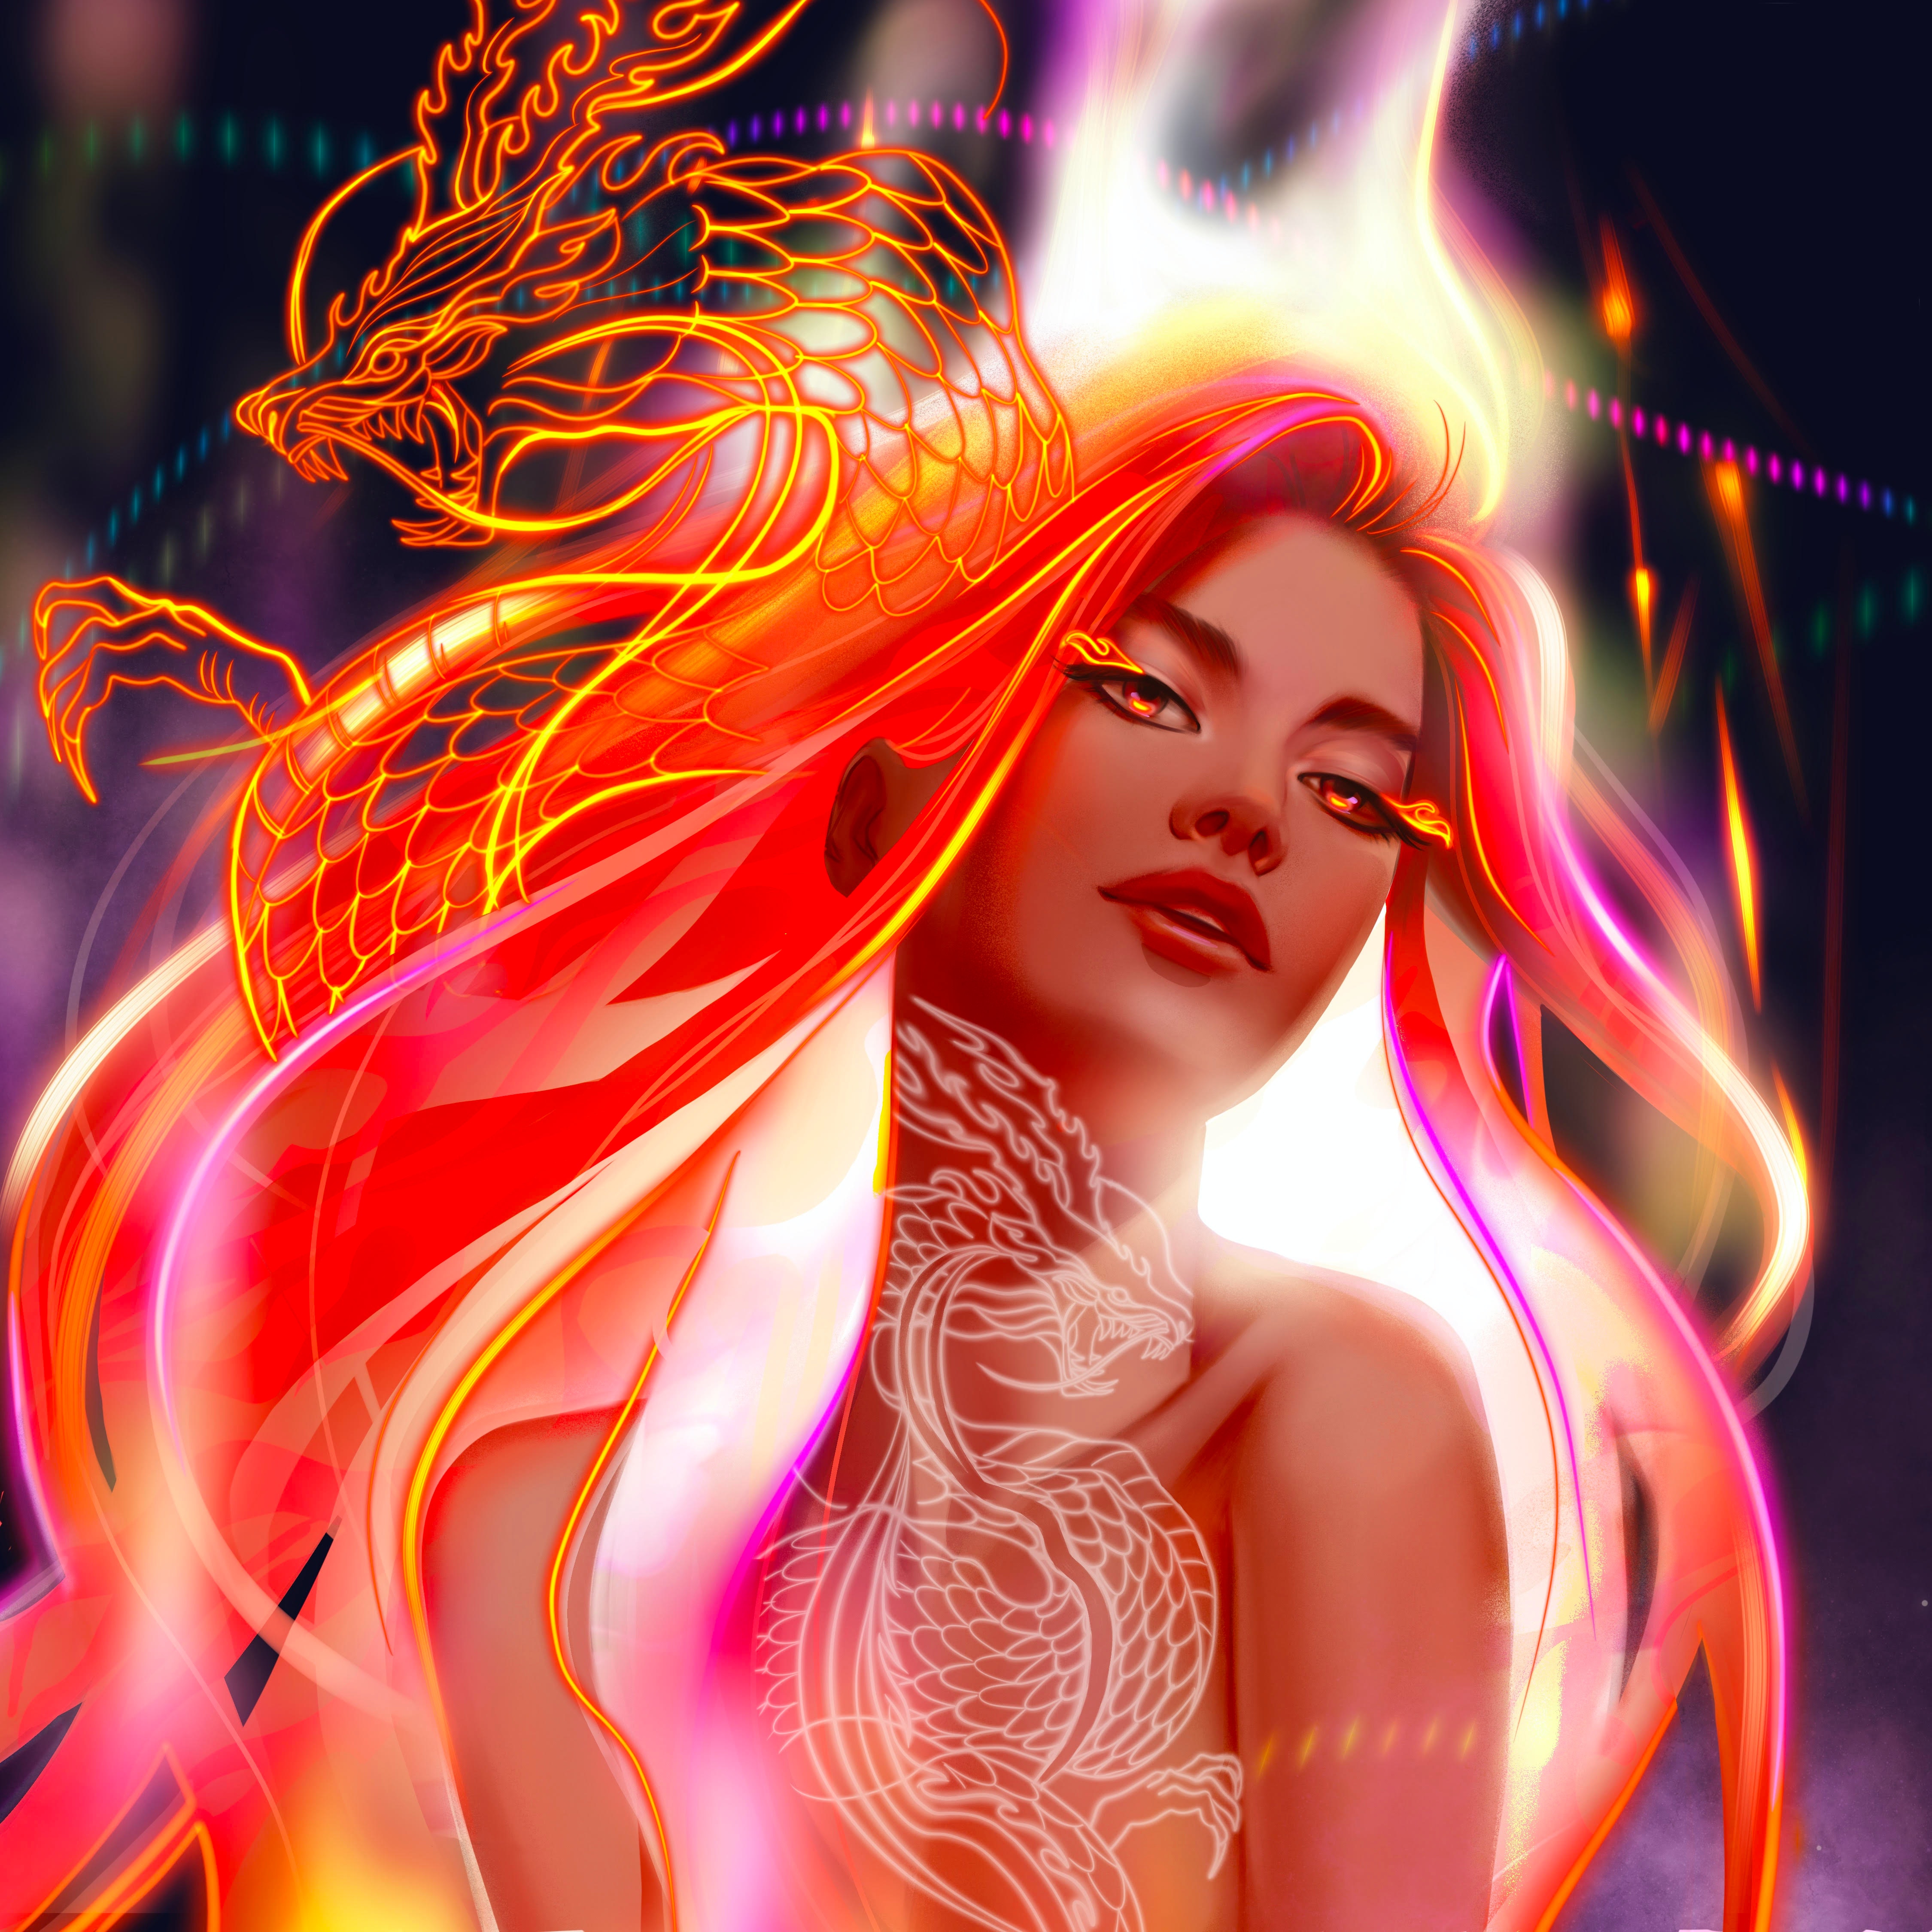 General 4500x4500 digital art artwork CGI women looking at viewer fantasy art fantasy girl redhead dragon long hair Chinese dragon